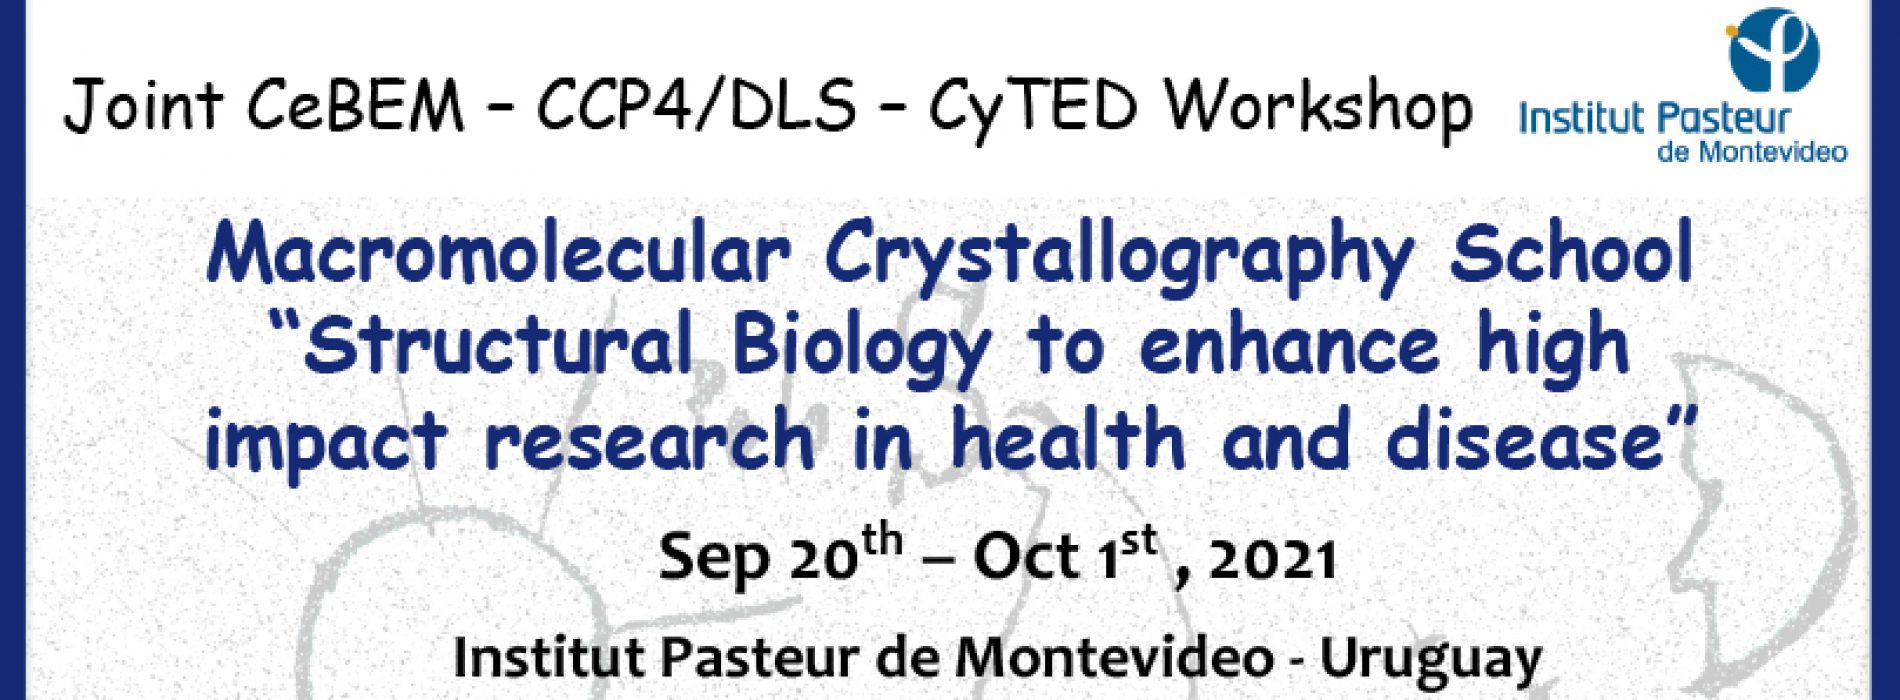 Macromolecular Crystallography School 2021